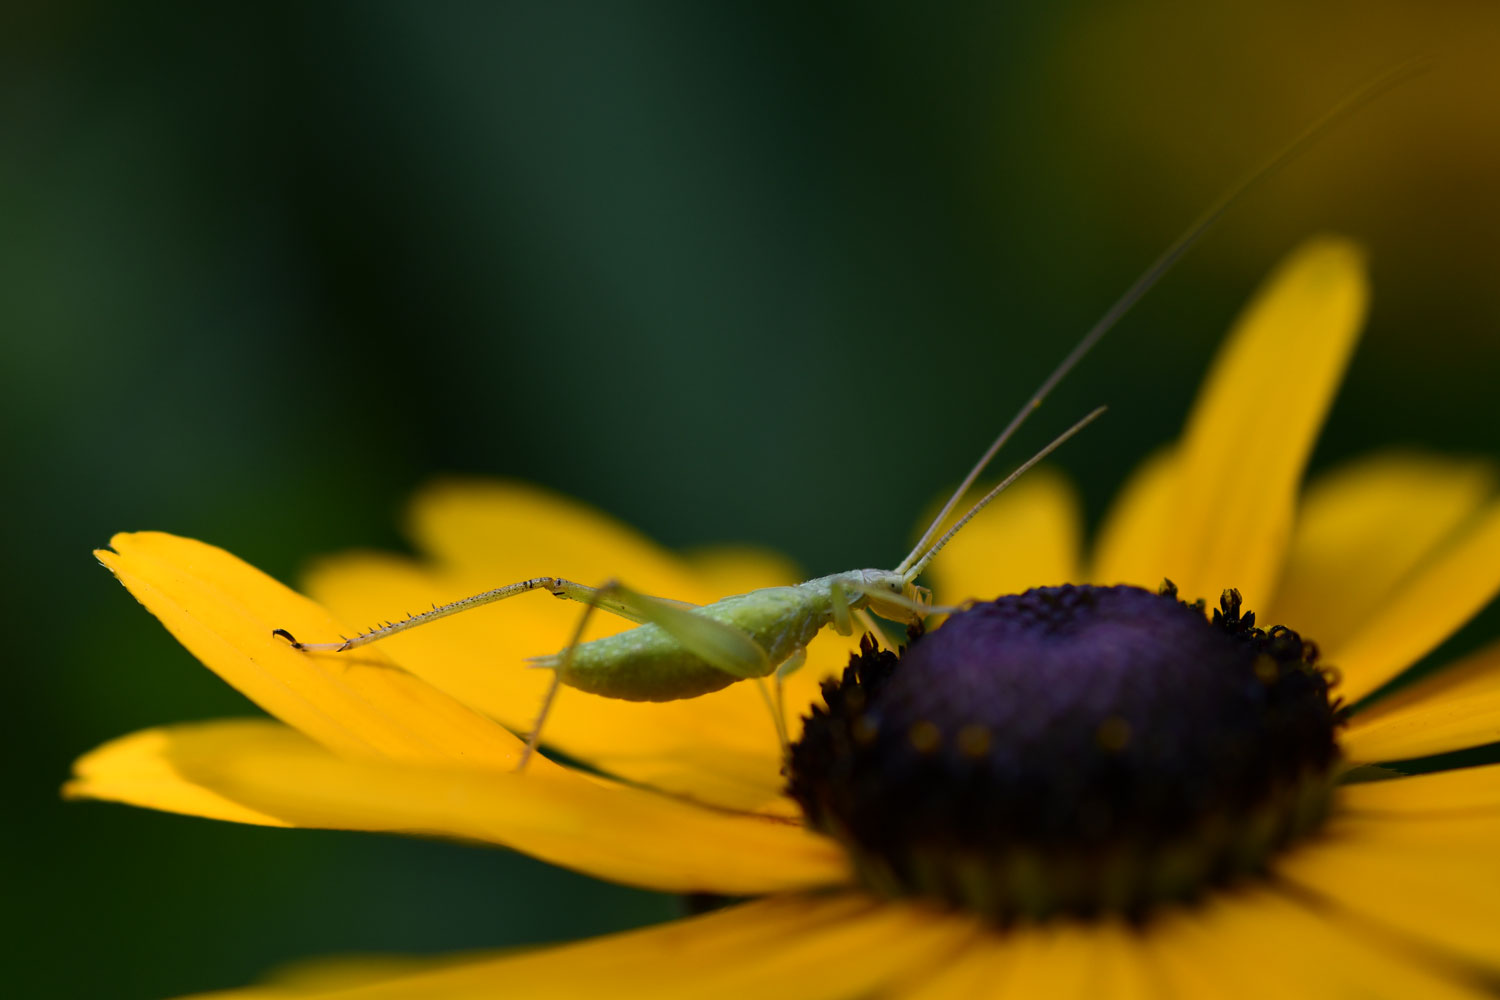 A katydid on a yellow flower